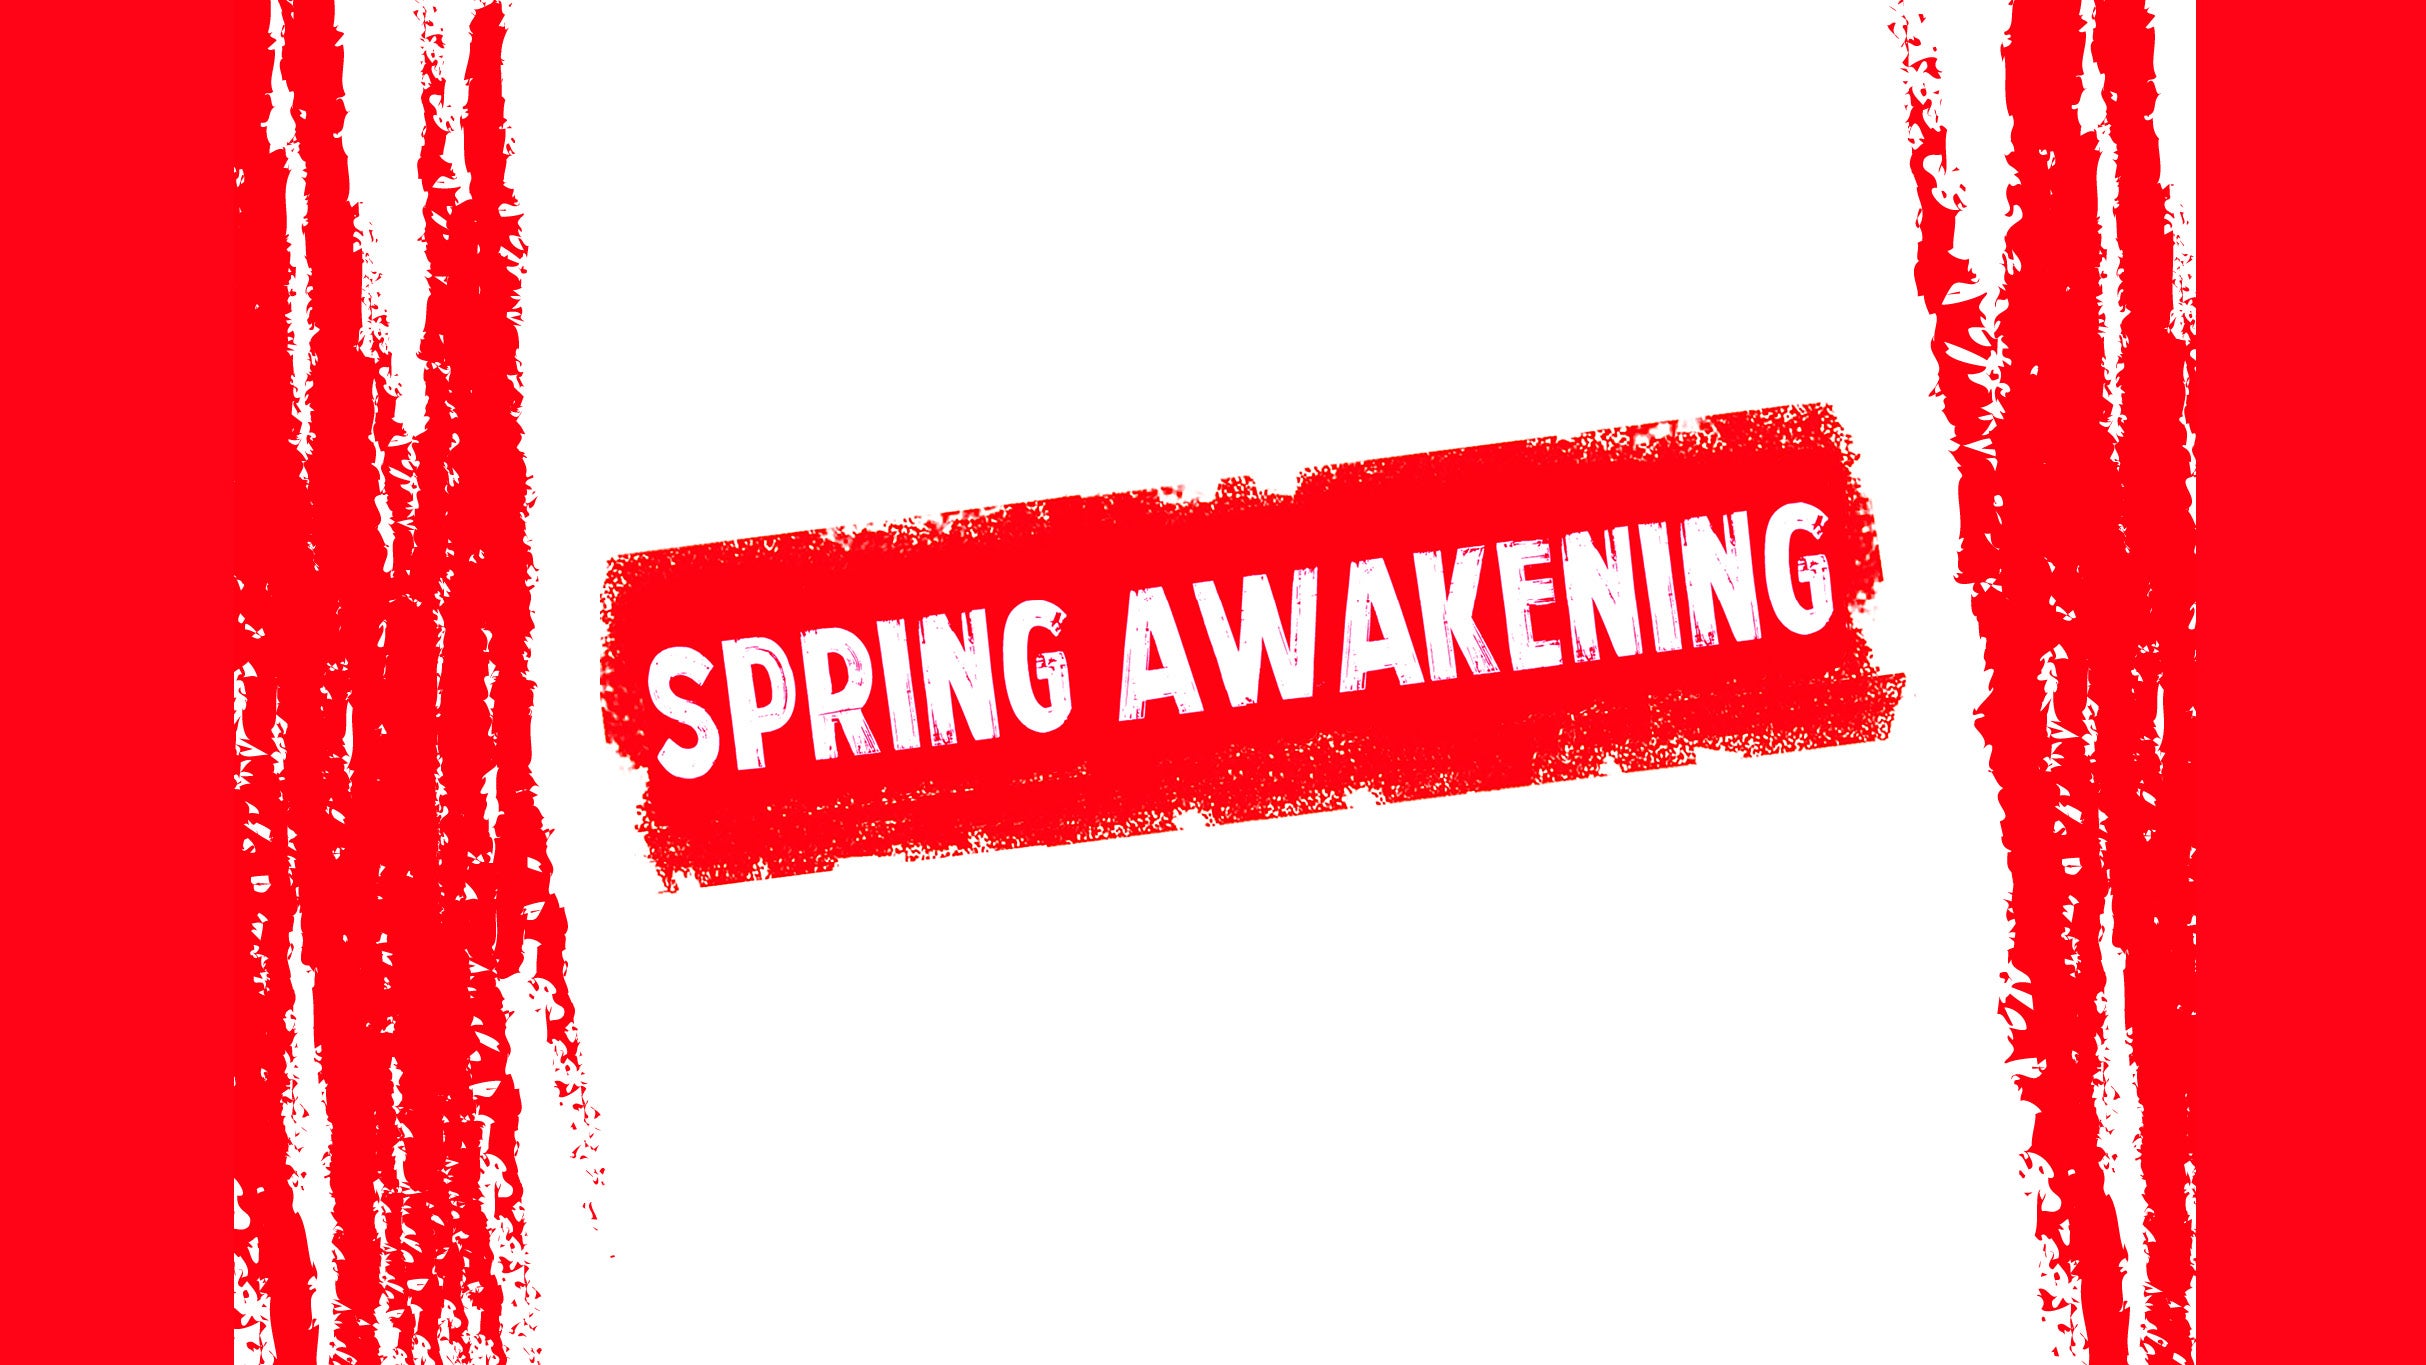 Spring Awakening at 5th Avenue Theatre